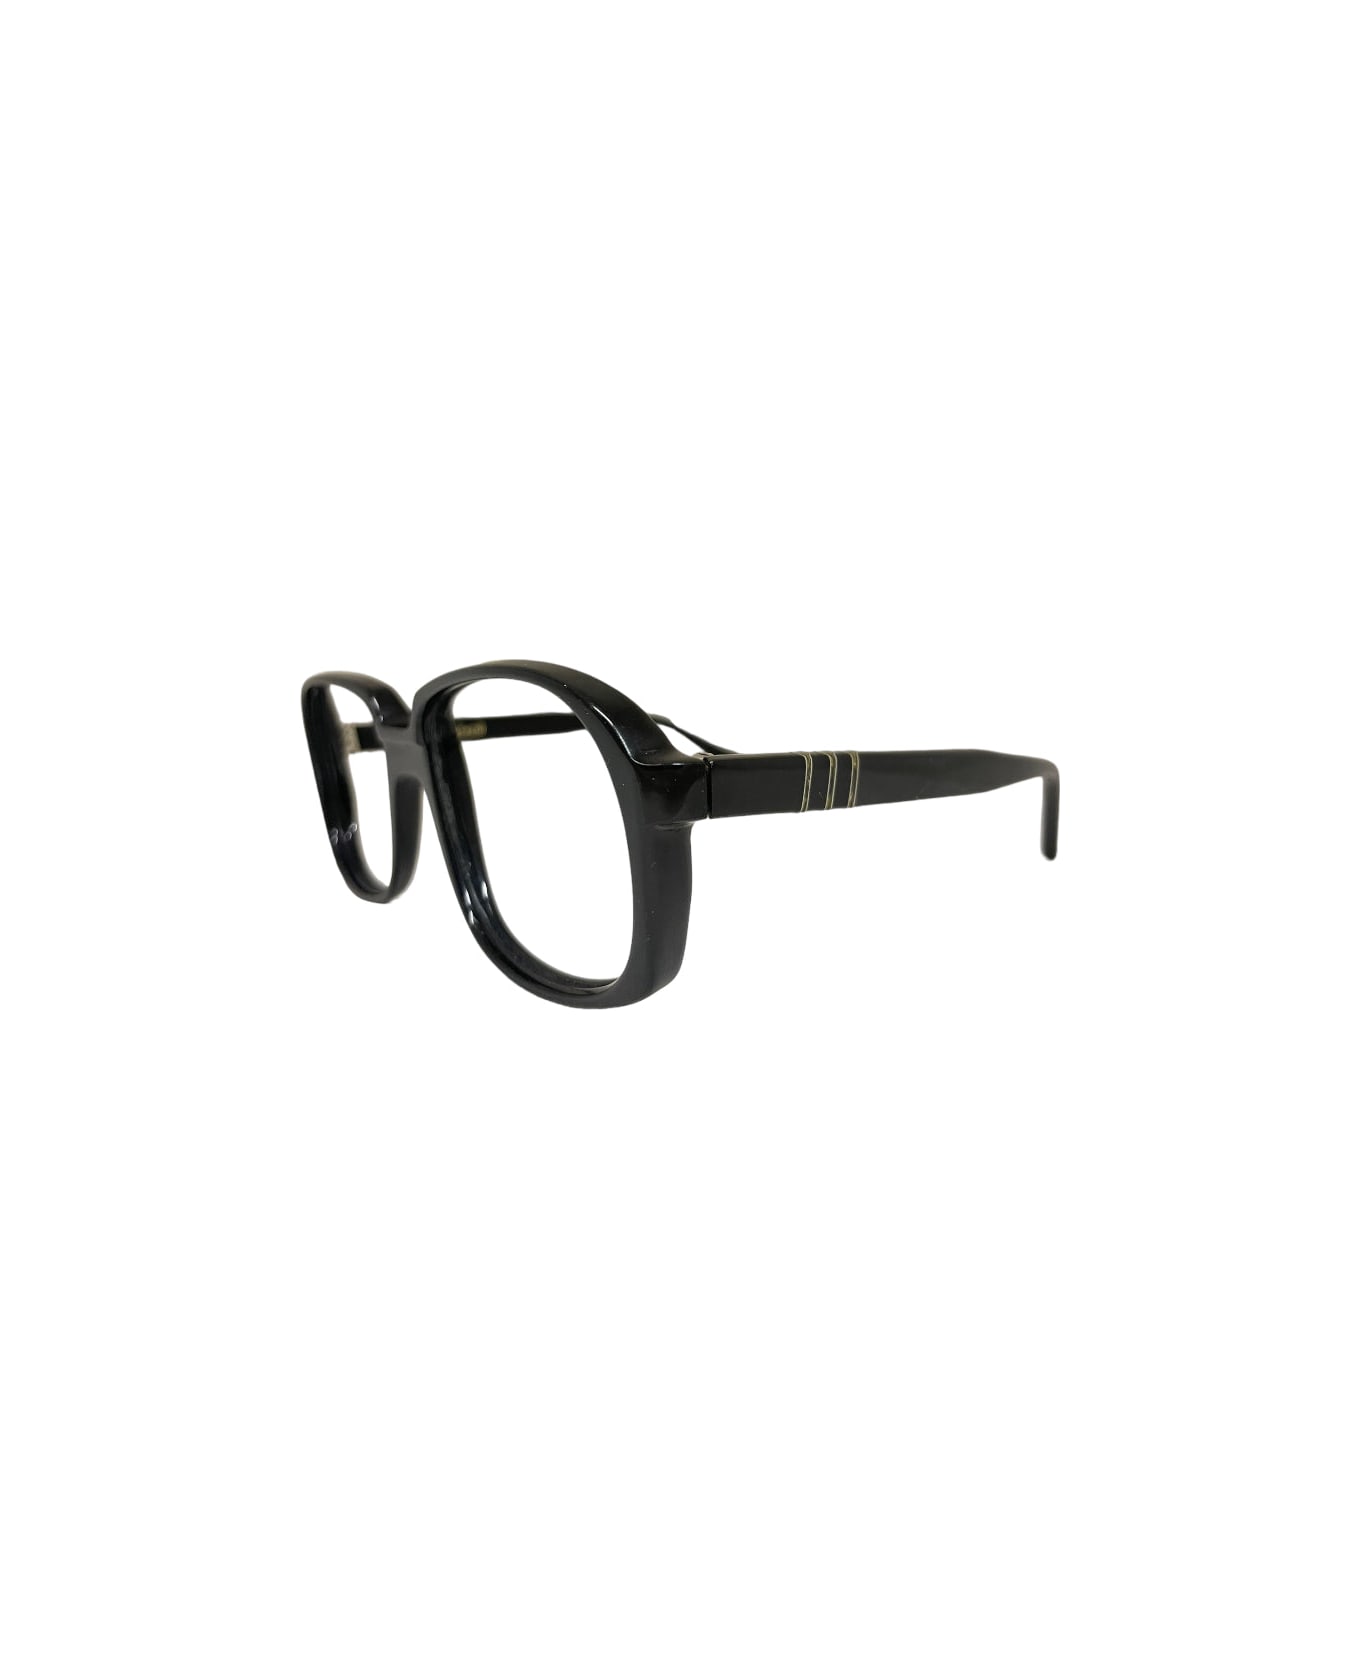 Persol Patent - Black Sunglasses